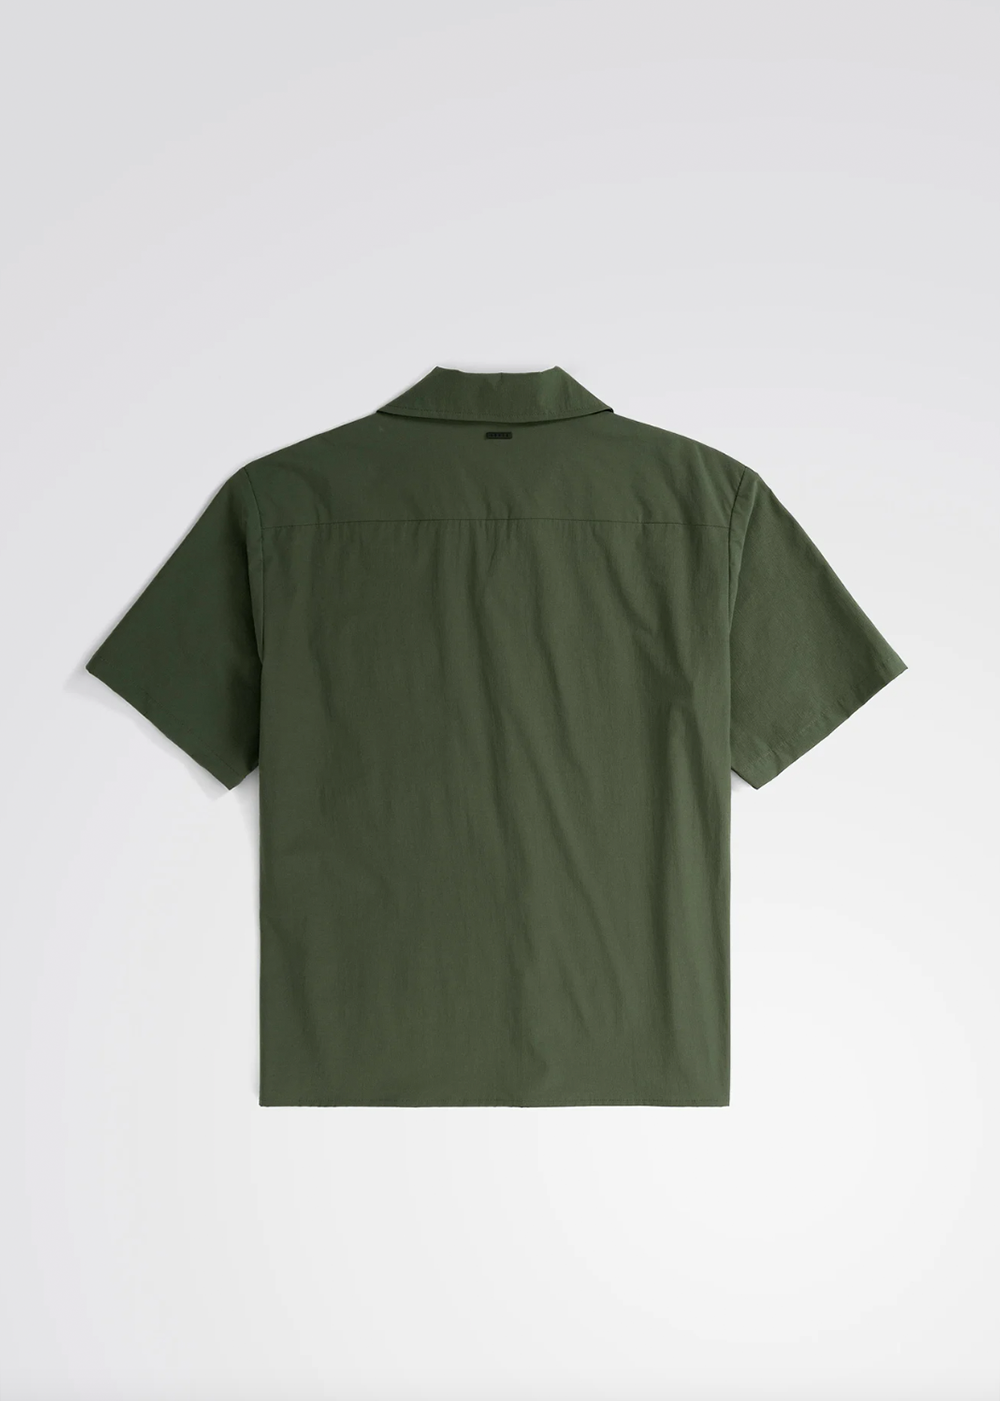 Carsten Travel Light Shirt - Spruce Green - Norse Projects Canada - Danali - N40-0626